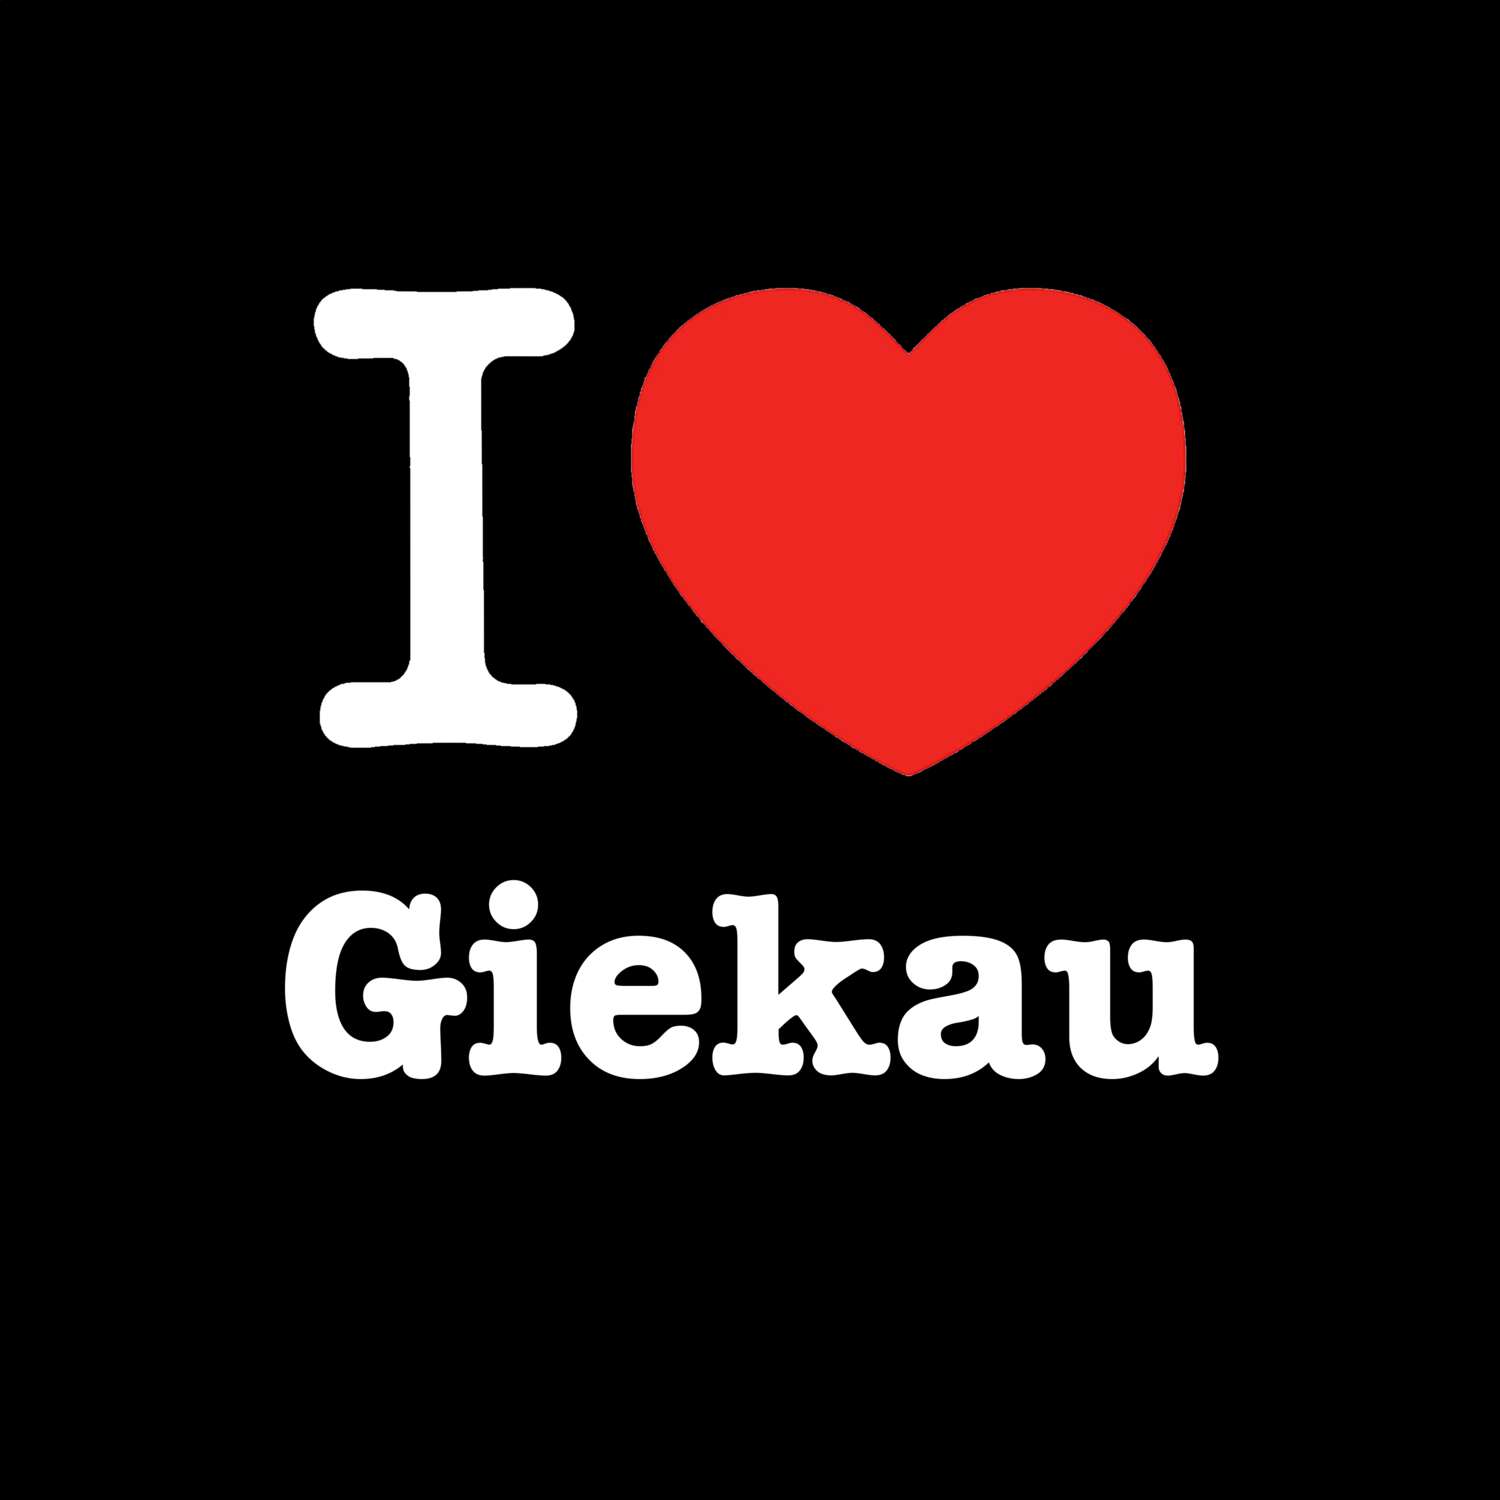 Giekau T-Shirt »I love«